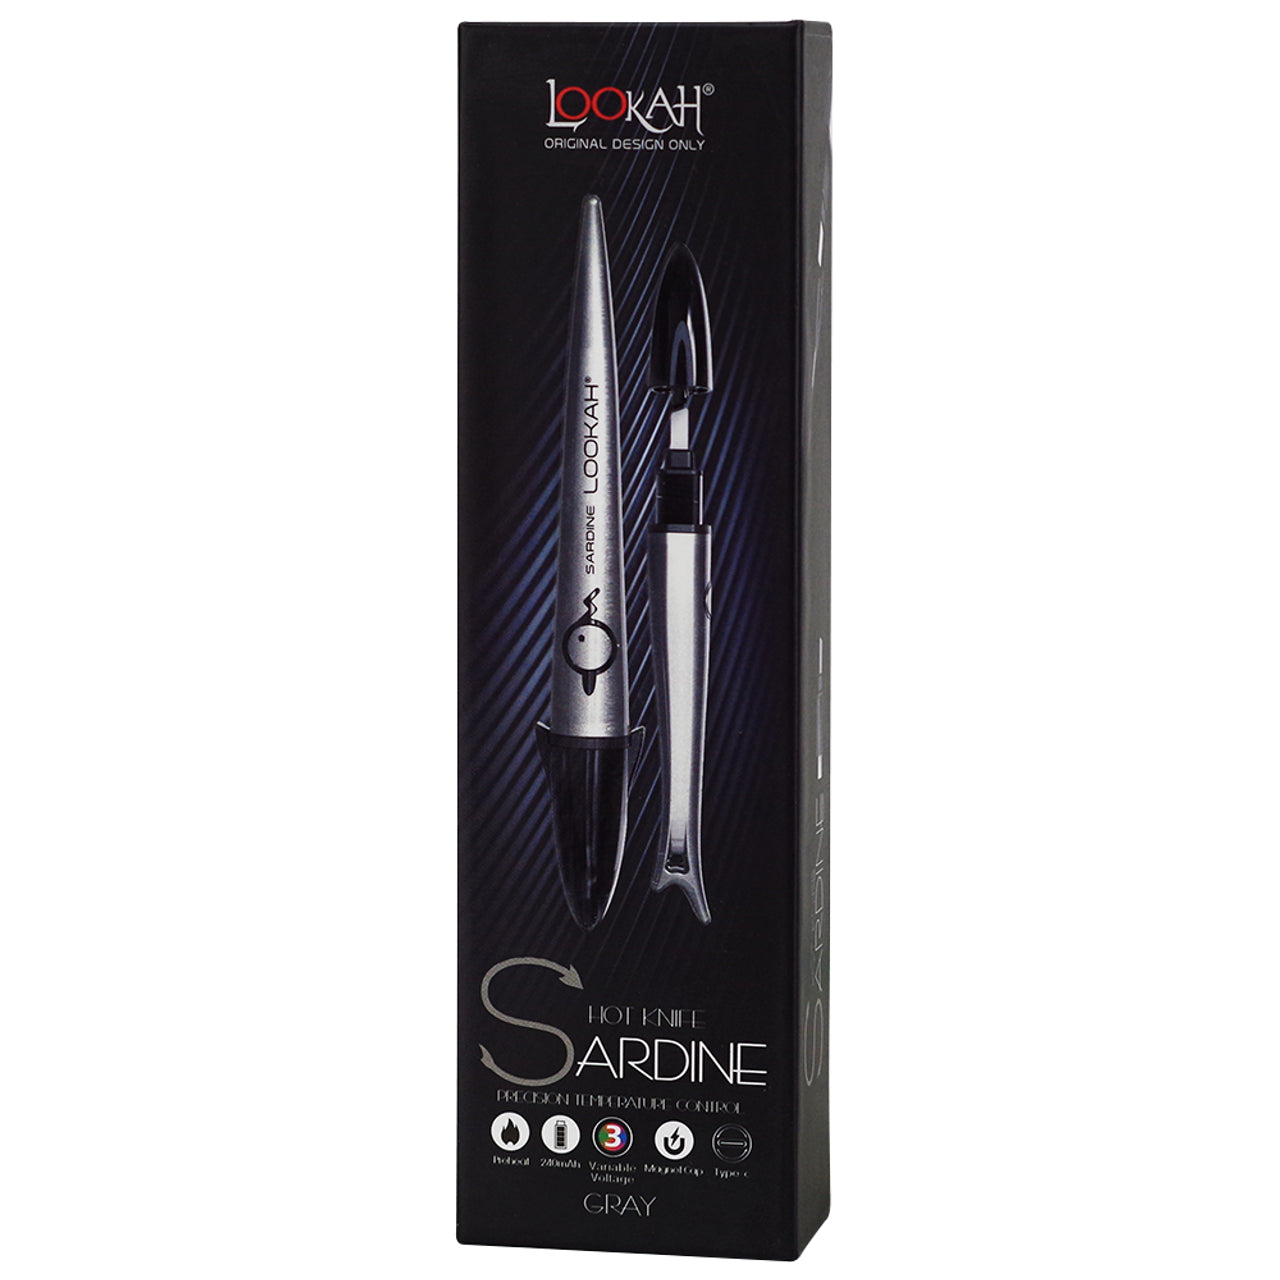 Lookah Sardine Hot Knife Electric Dab Tool - Supply Natural